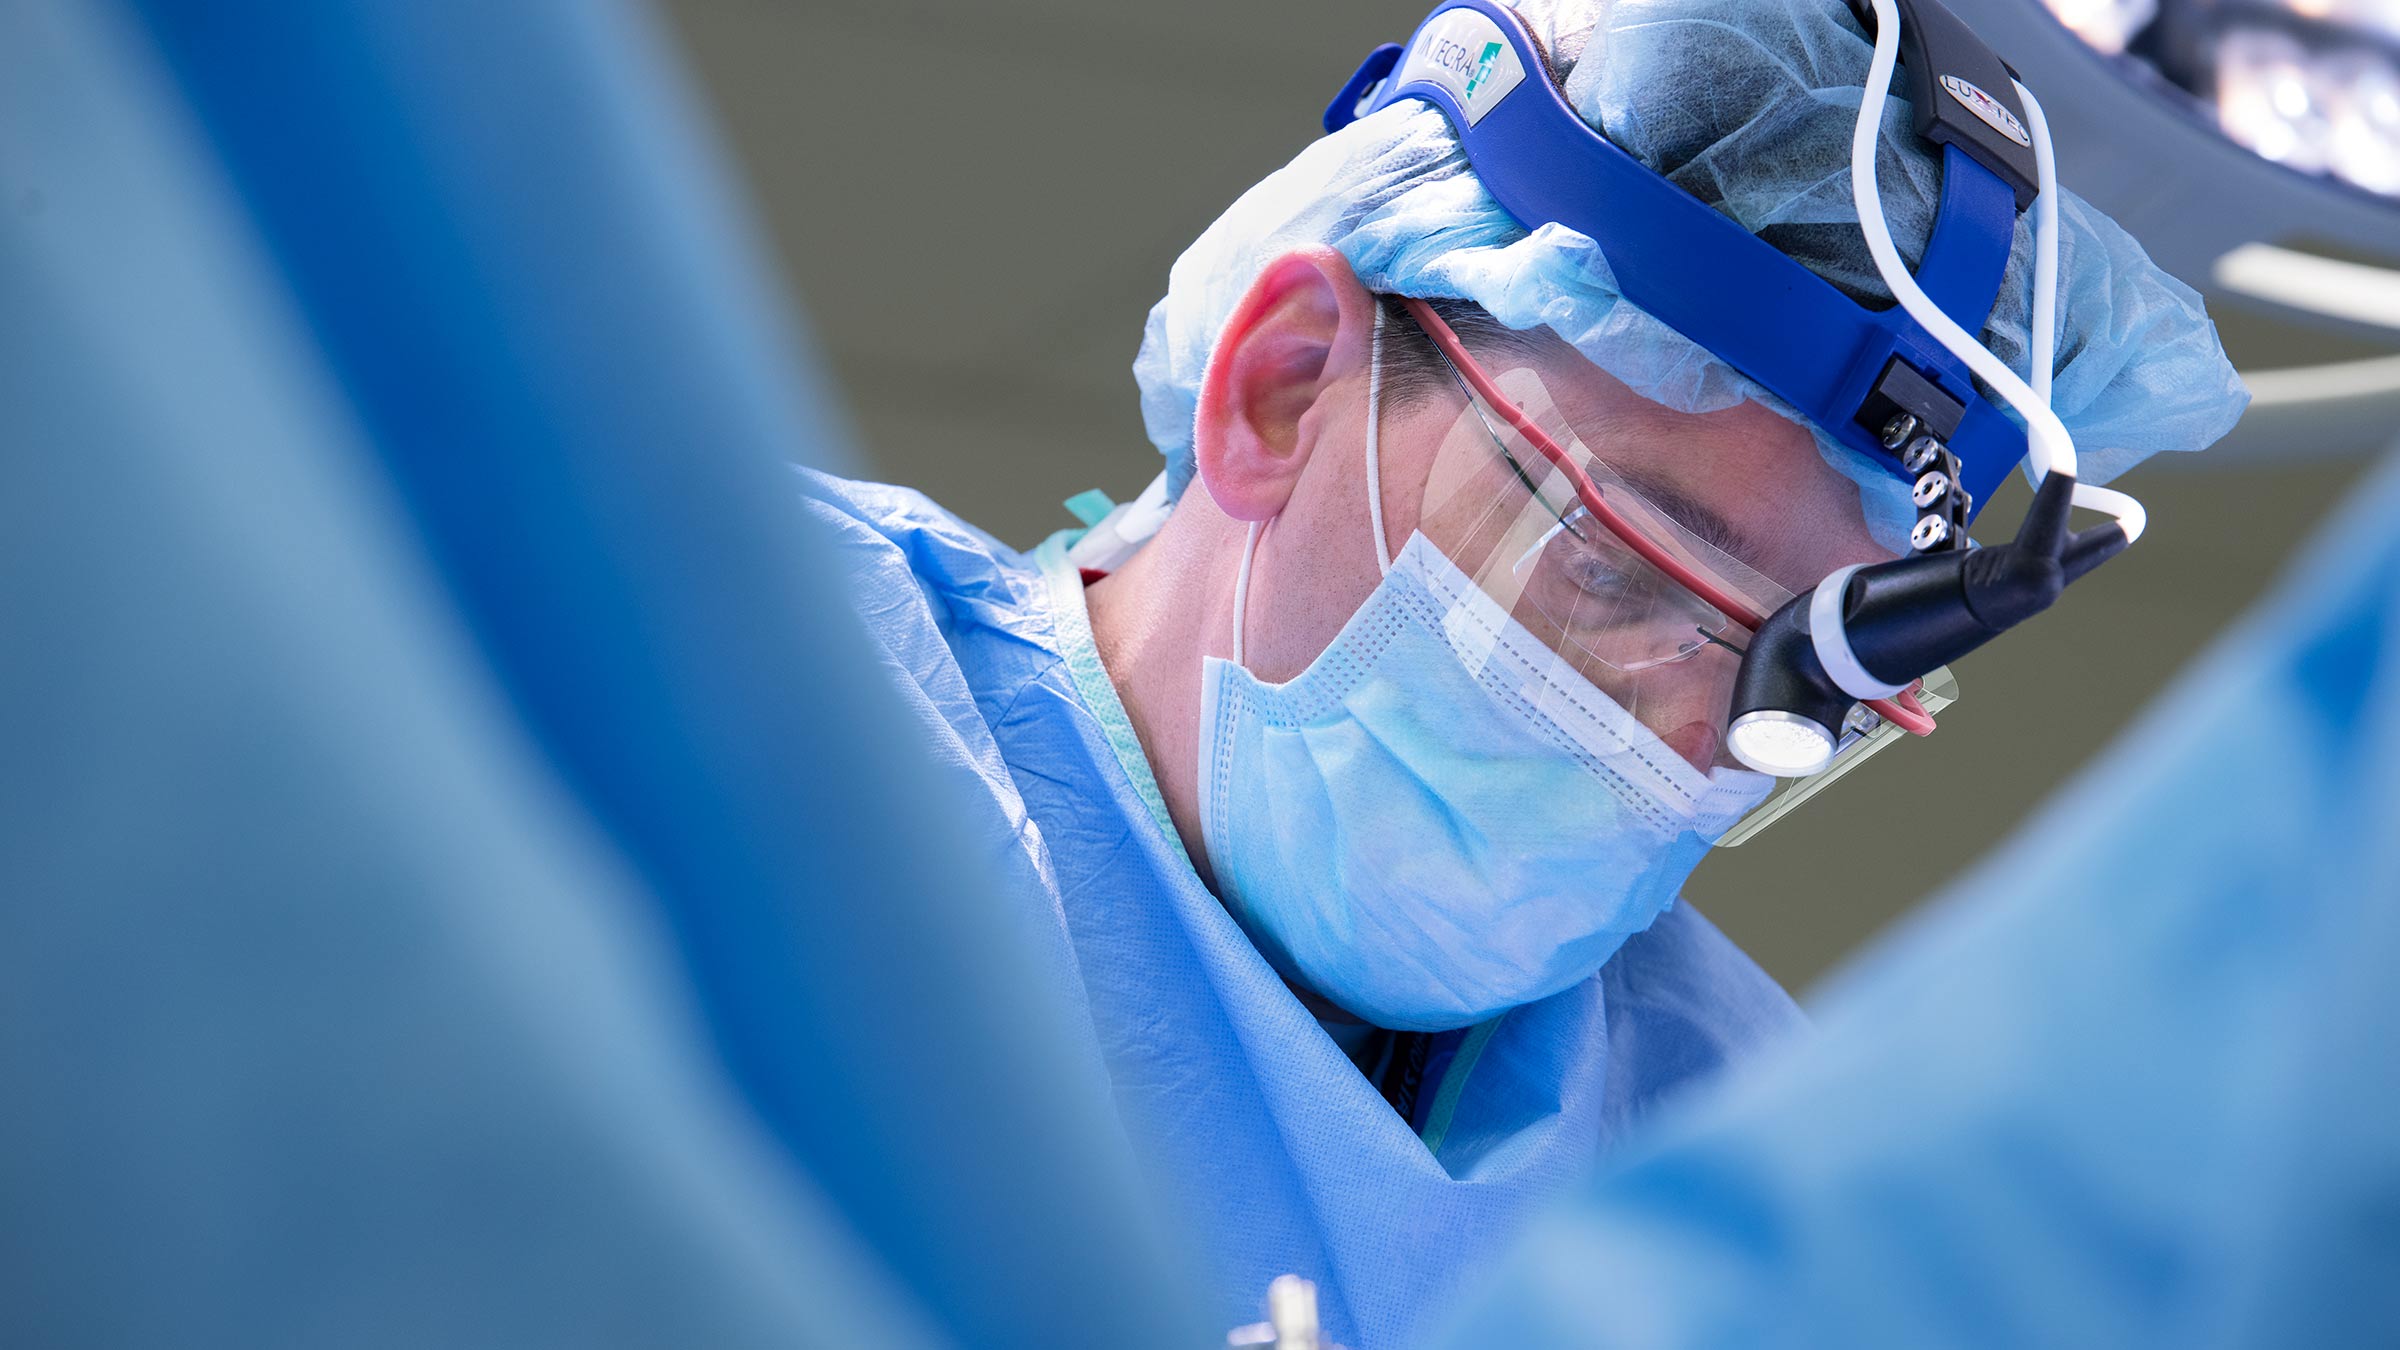 Dr. Pawlik performing a surgery